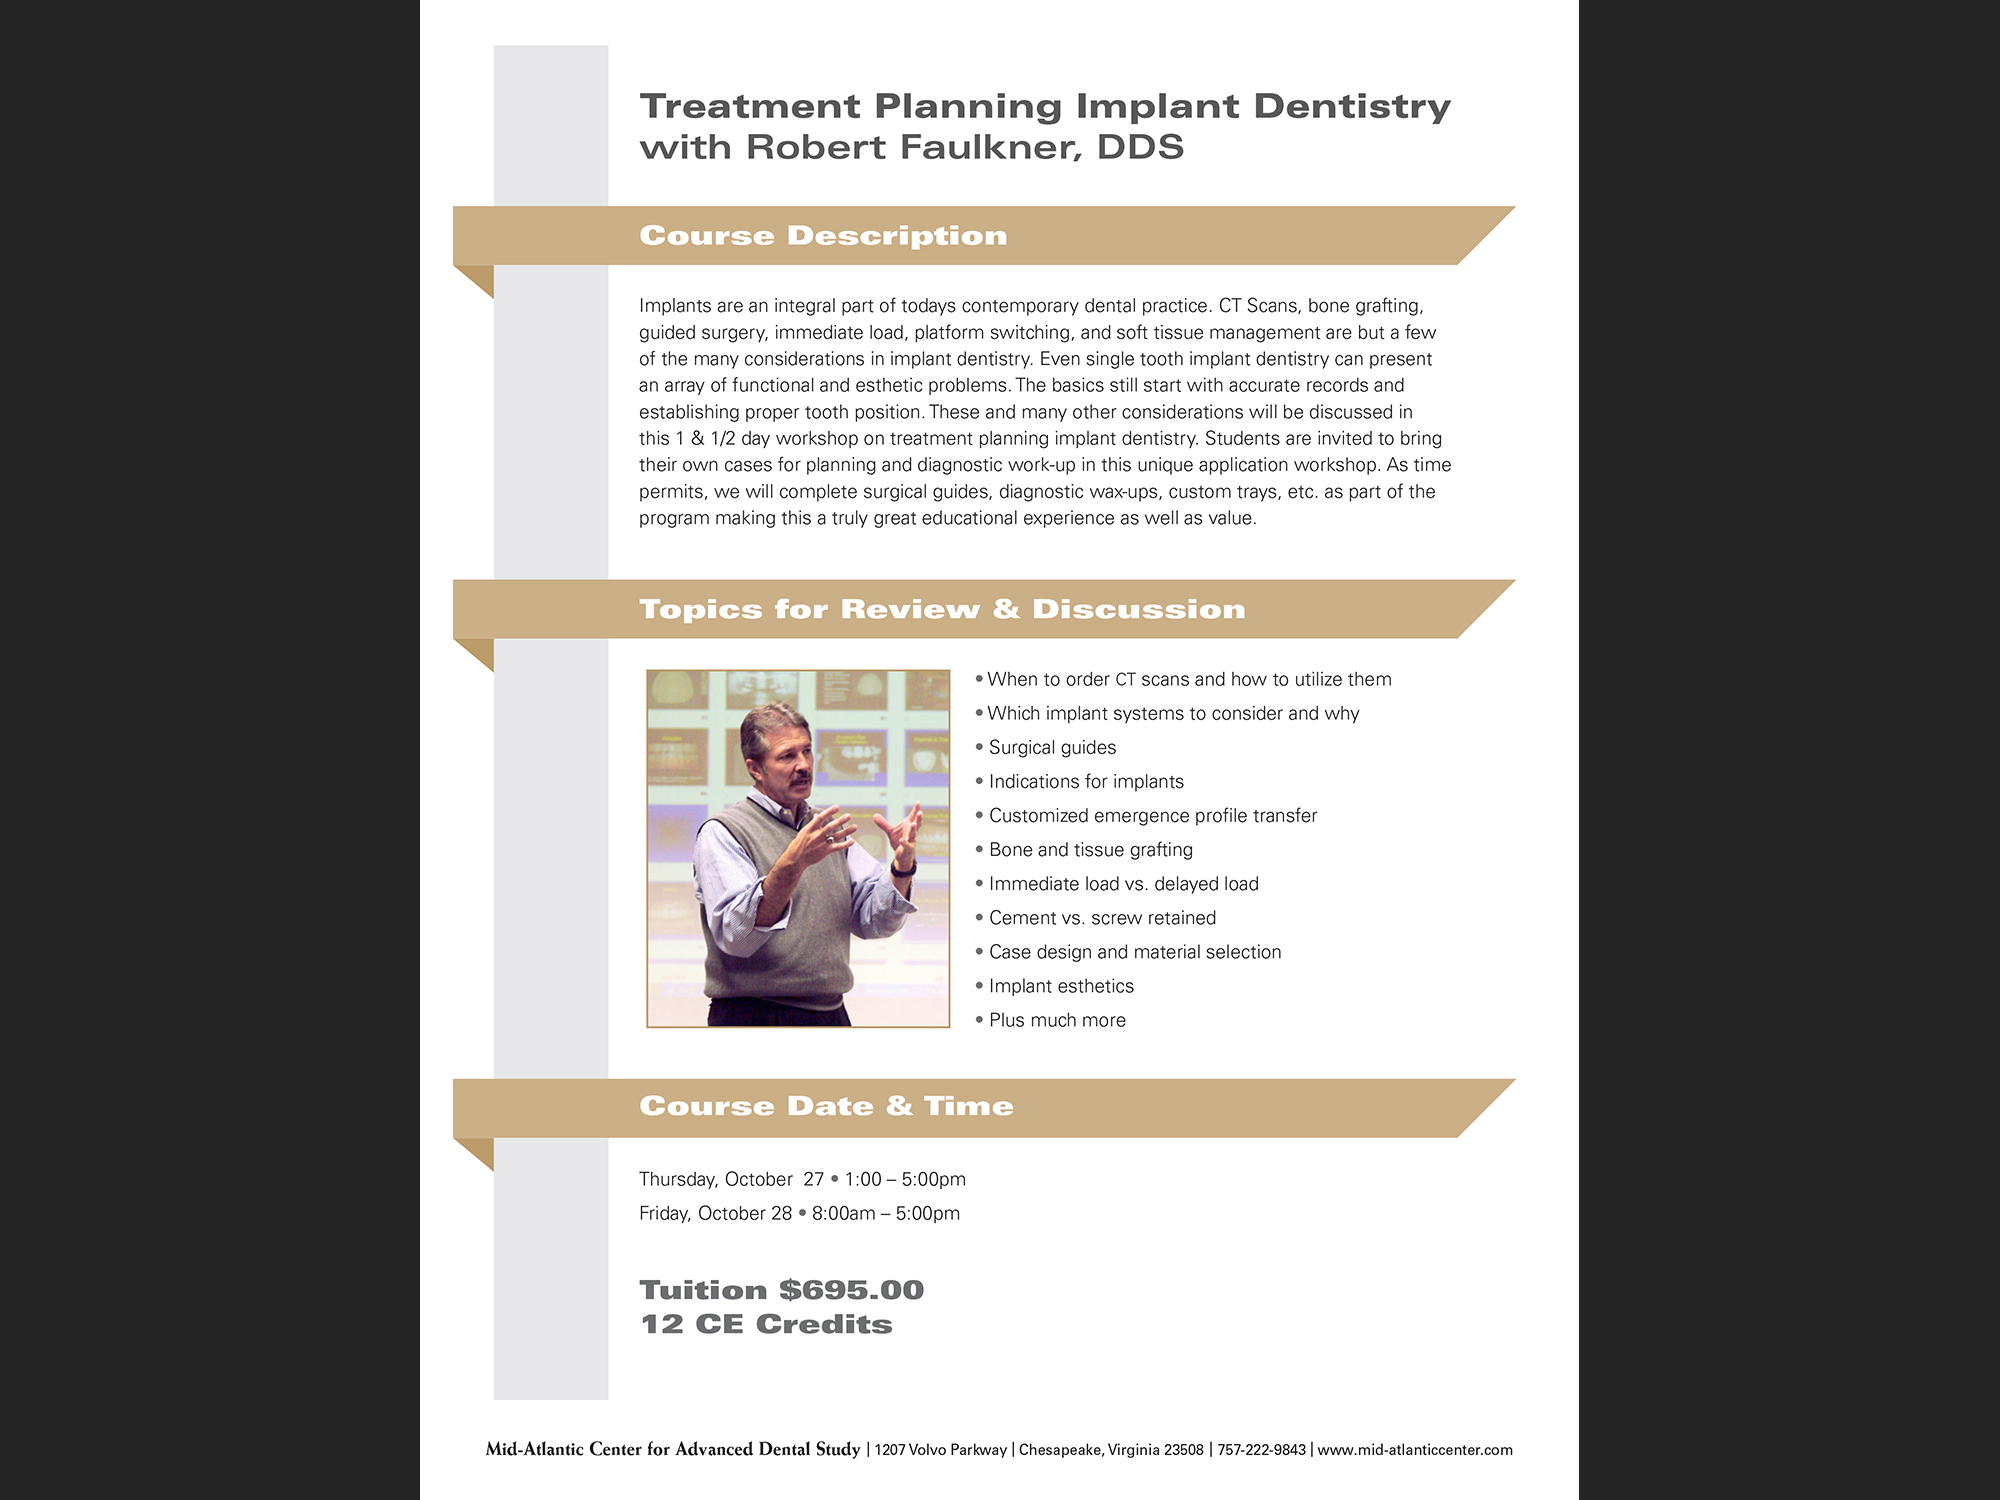 Treatment Planning Implant Dentistry, Bay View Dental Lab, 2019; statement flyer.